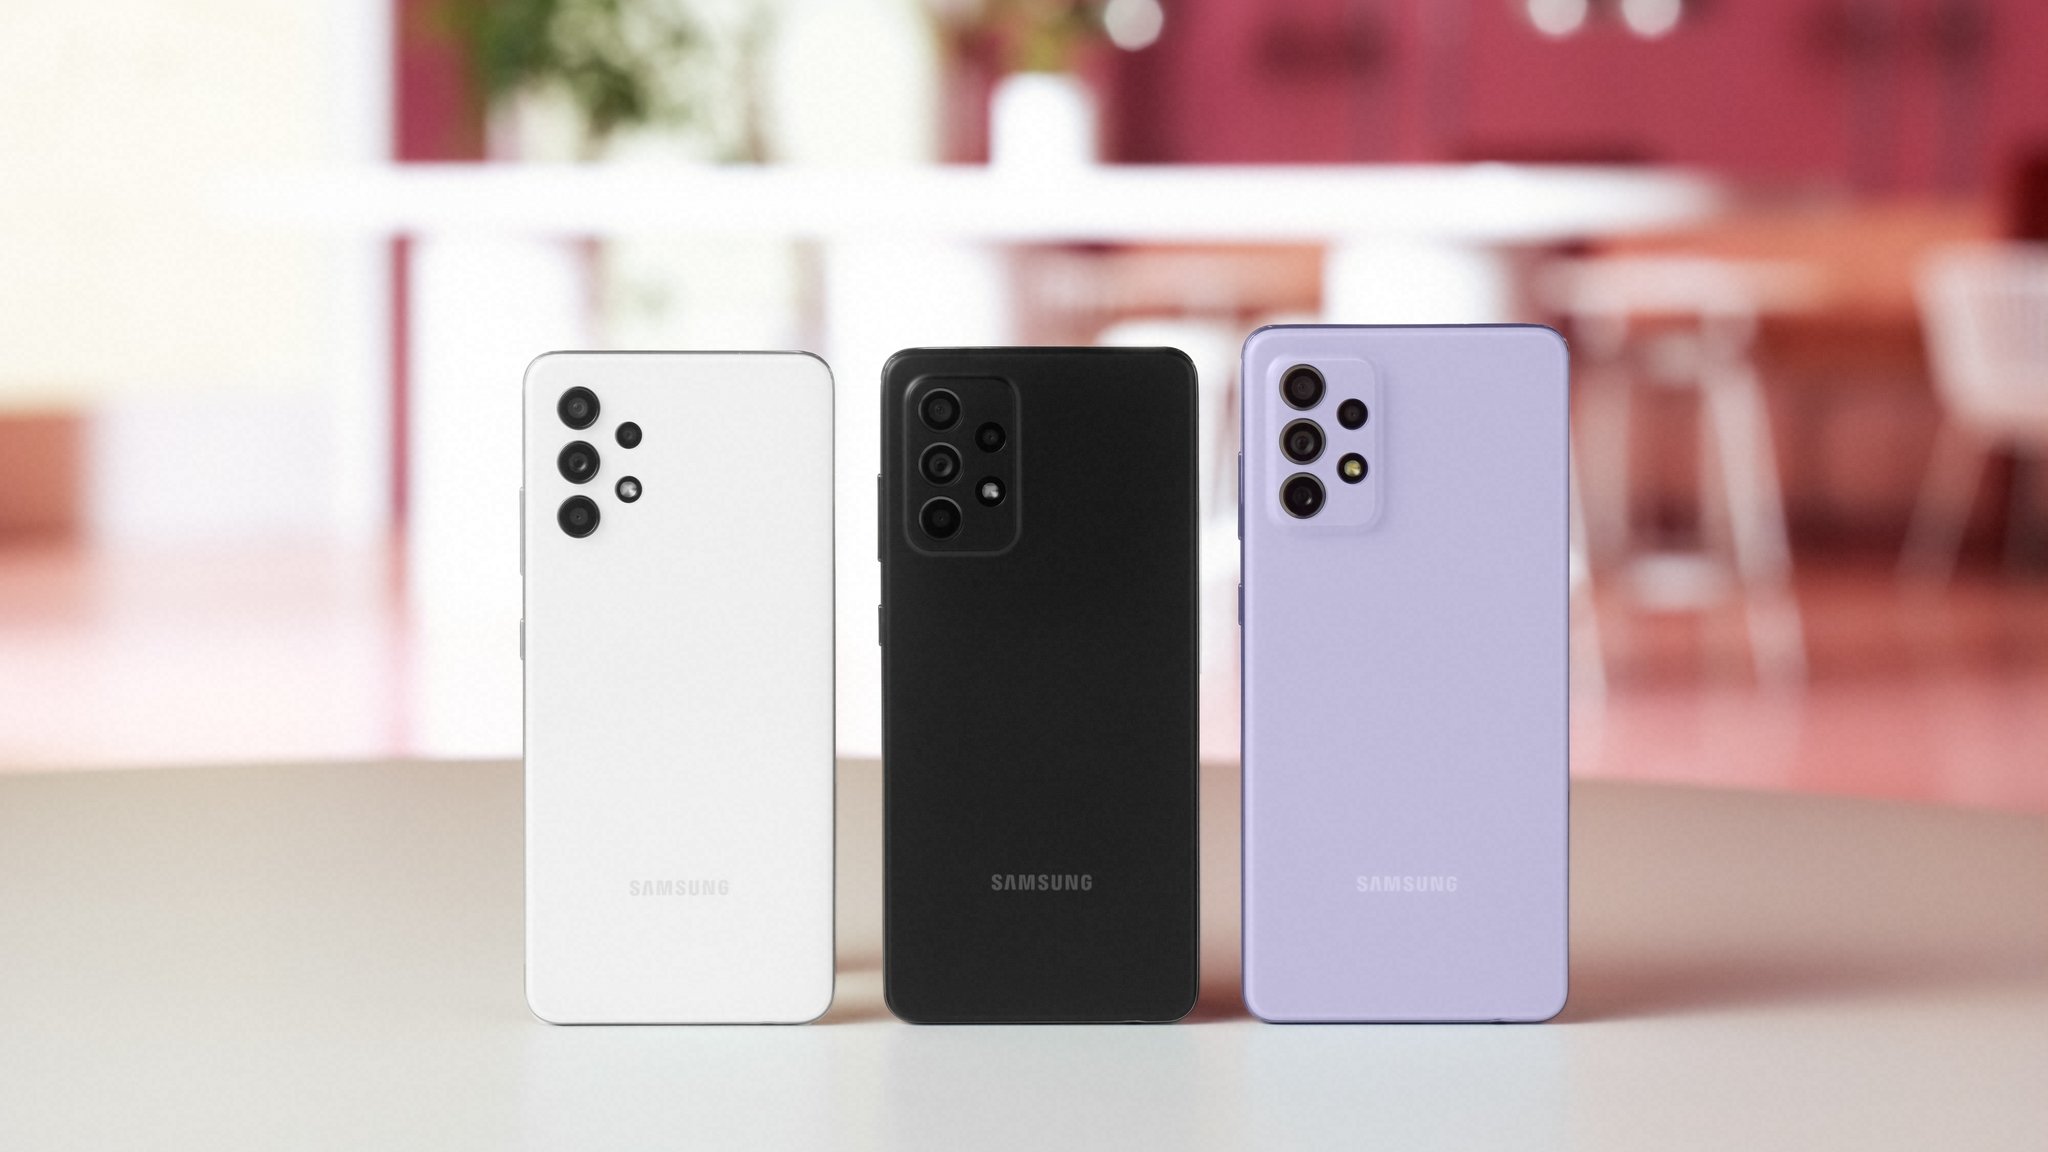 Samsung Galaxy A32 White, A52 Black, and A72 Violet